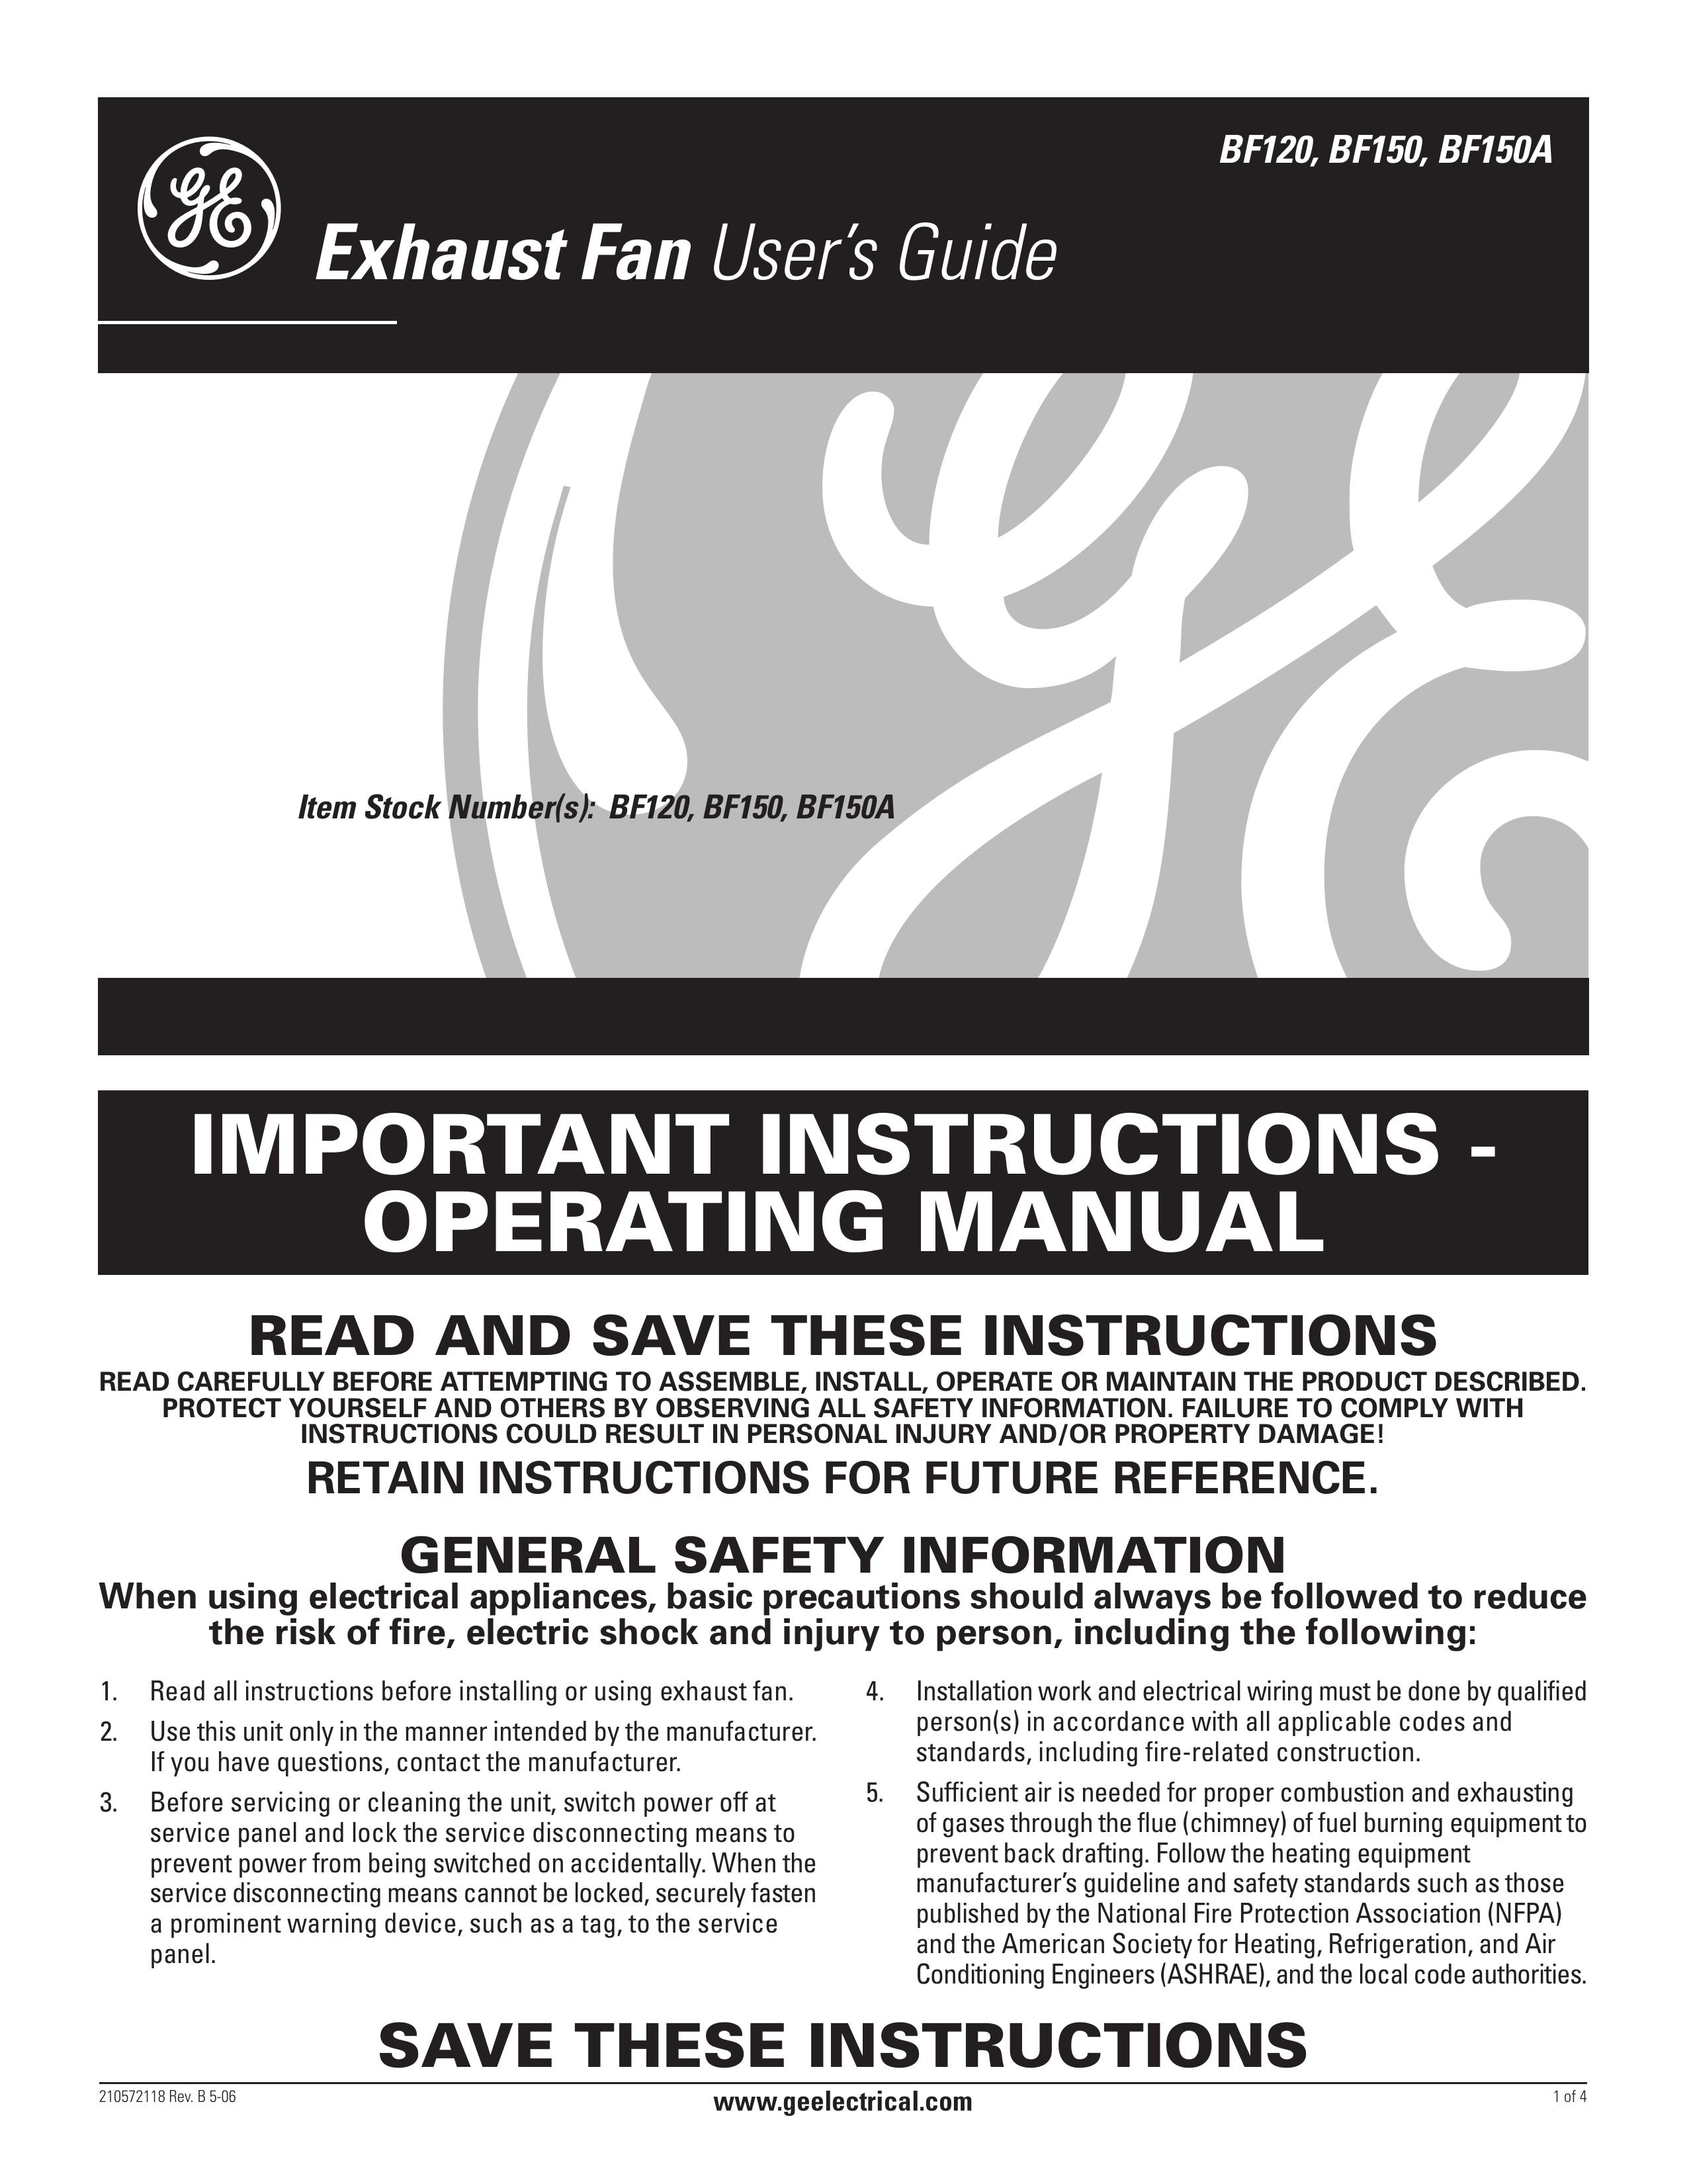 GE BF150A Ventilation Hood User Manual